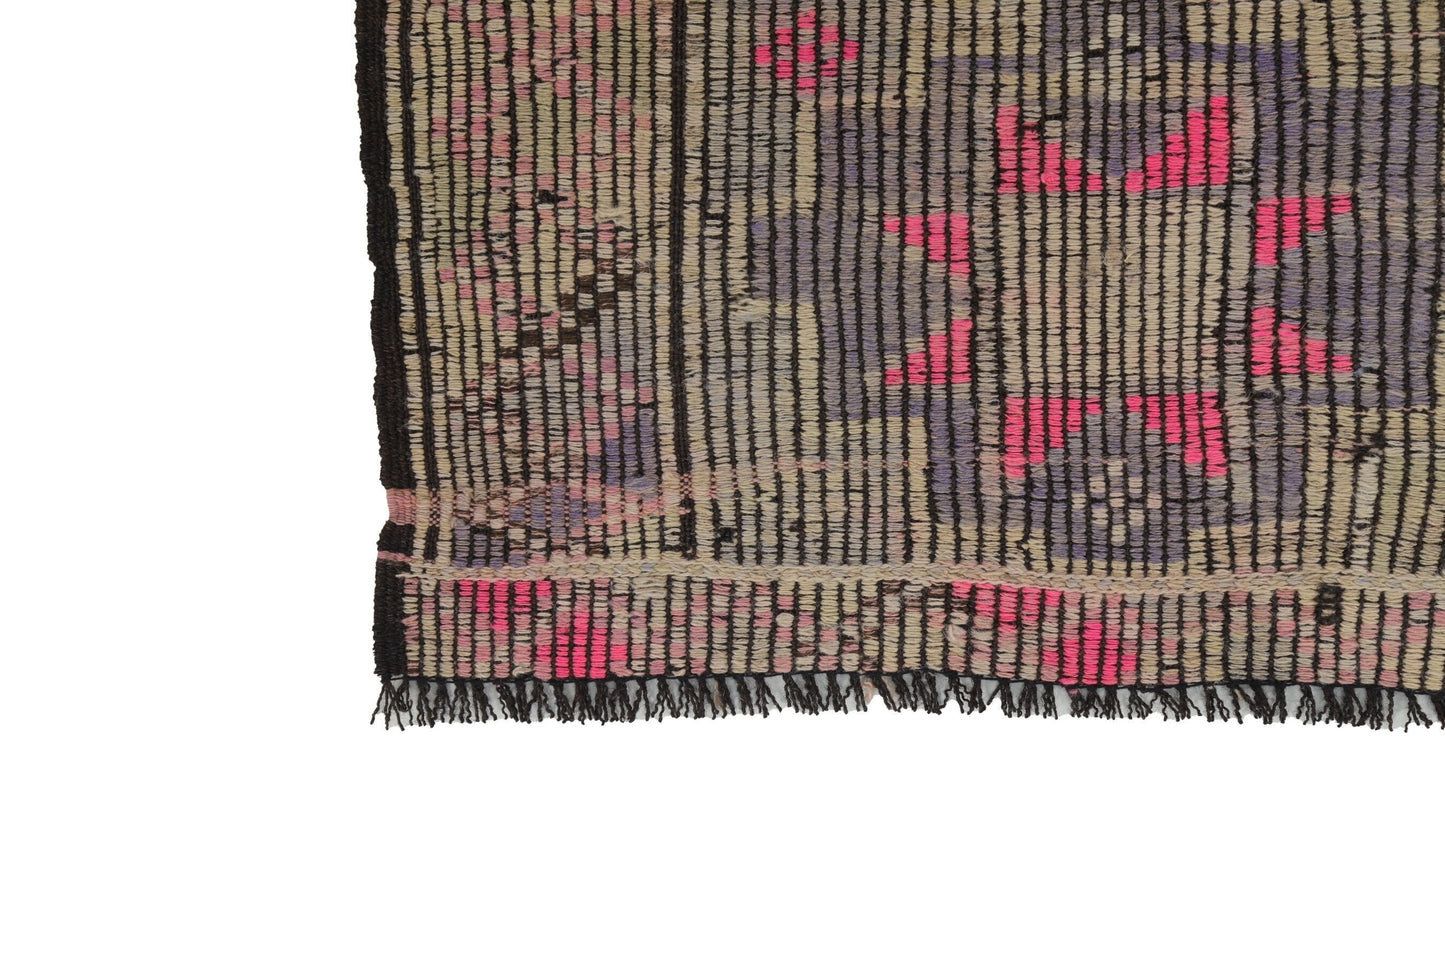 6x10 ,Distressed Pink Vintage Kilim rug,Turkish Kilim rug,Bohemian rug,Eclectic decor,Living room rug,Nursery rug,Area rug,5'6x10'0 ft, 8135